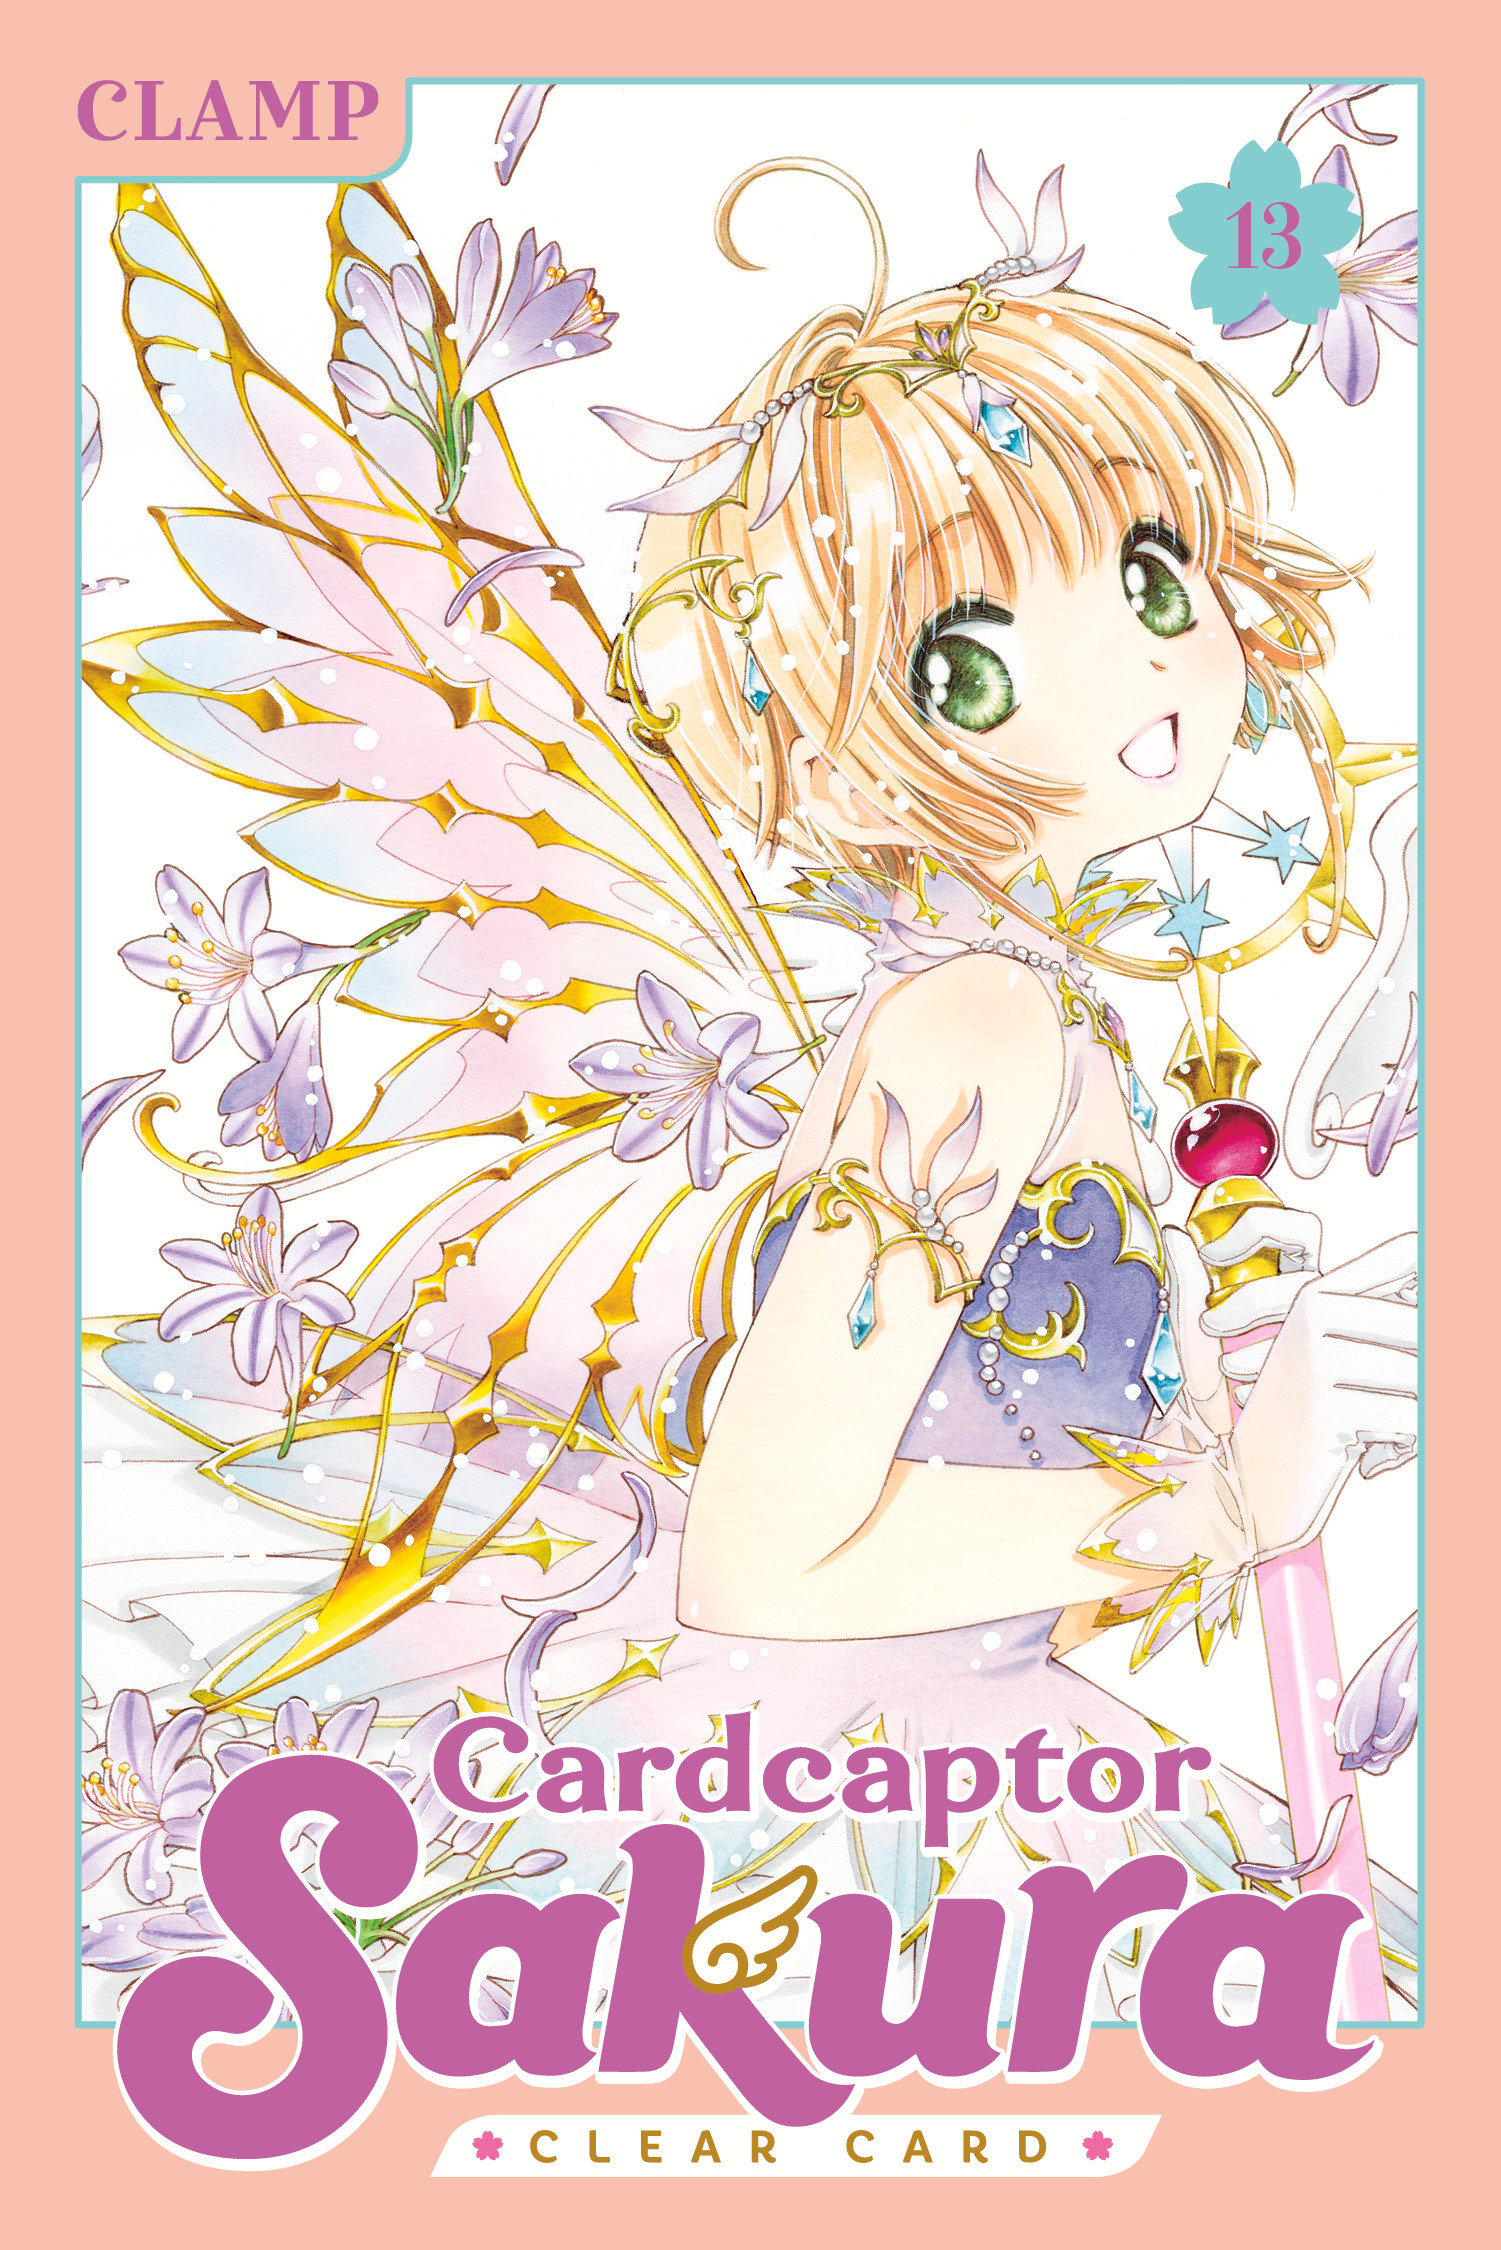 Cardcaptor Sakura Clear Card Manga Volume 13